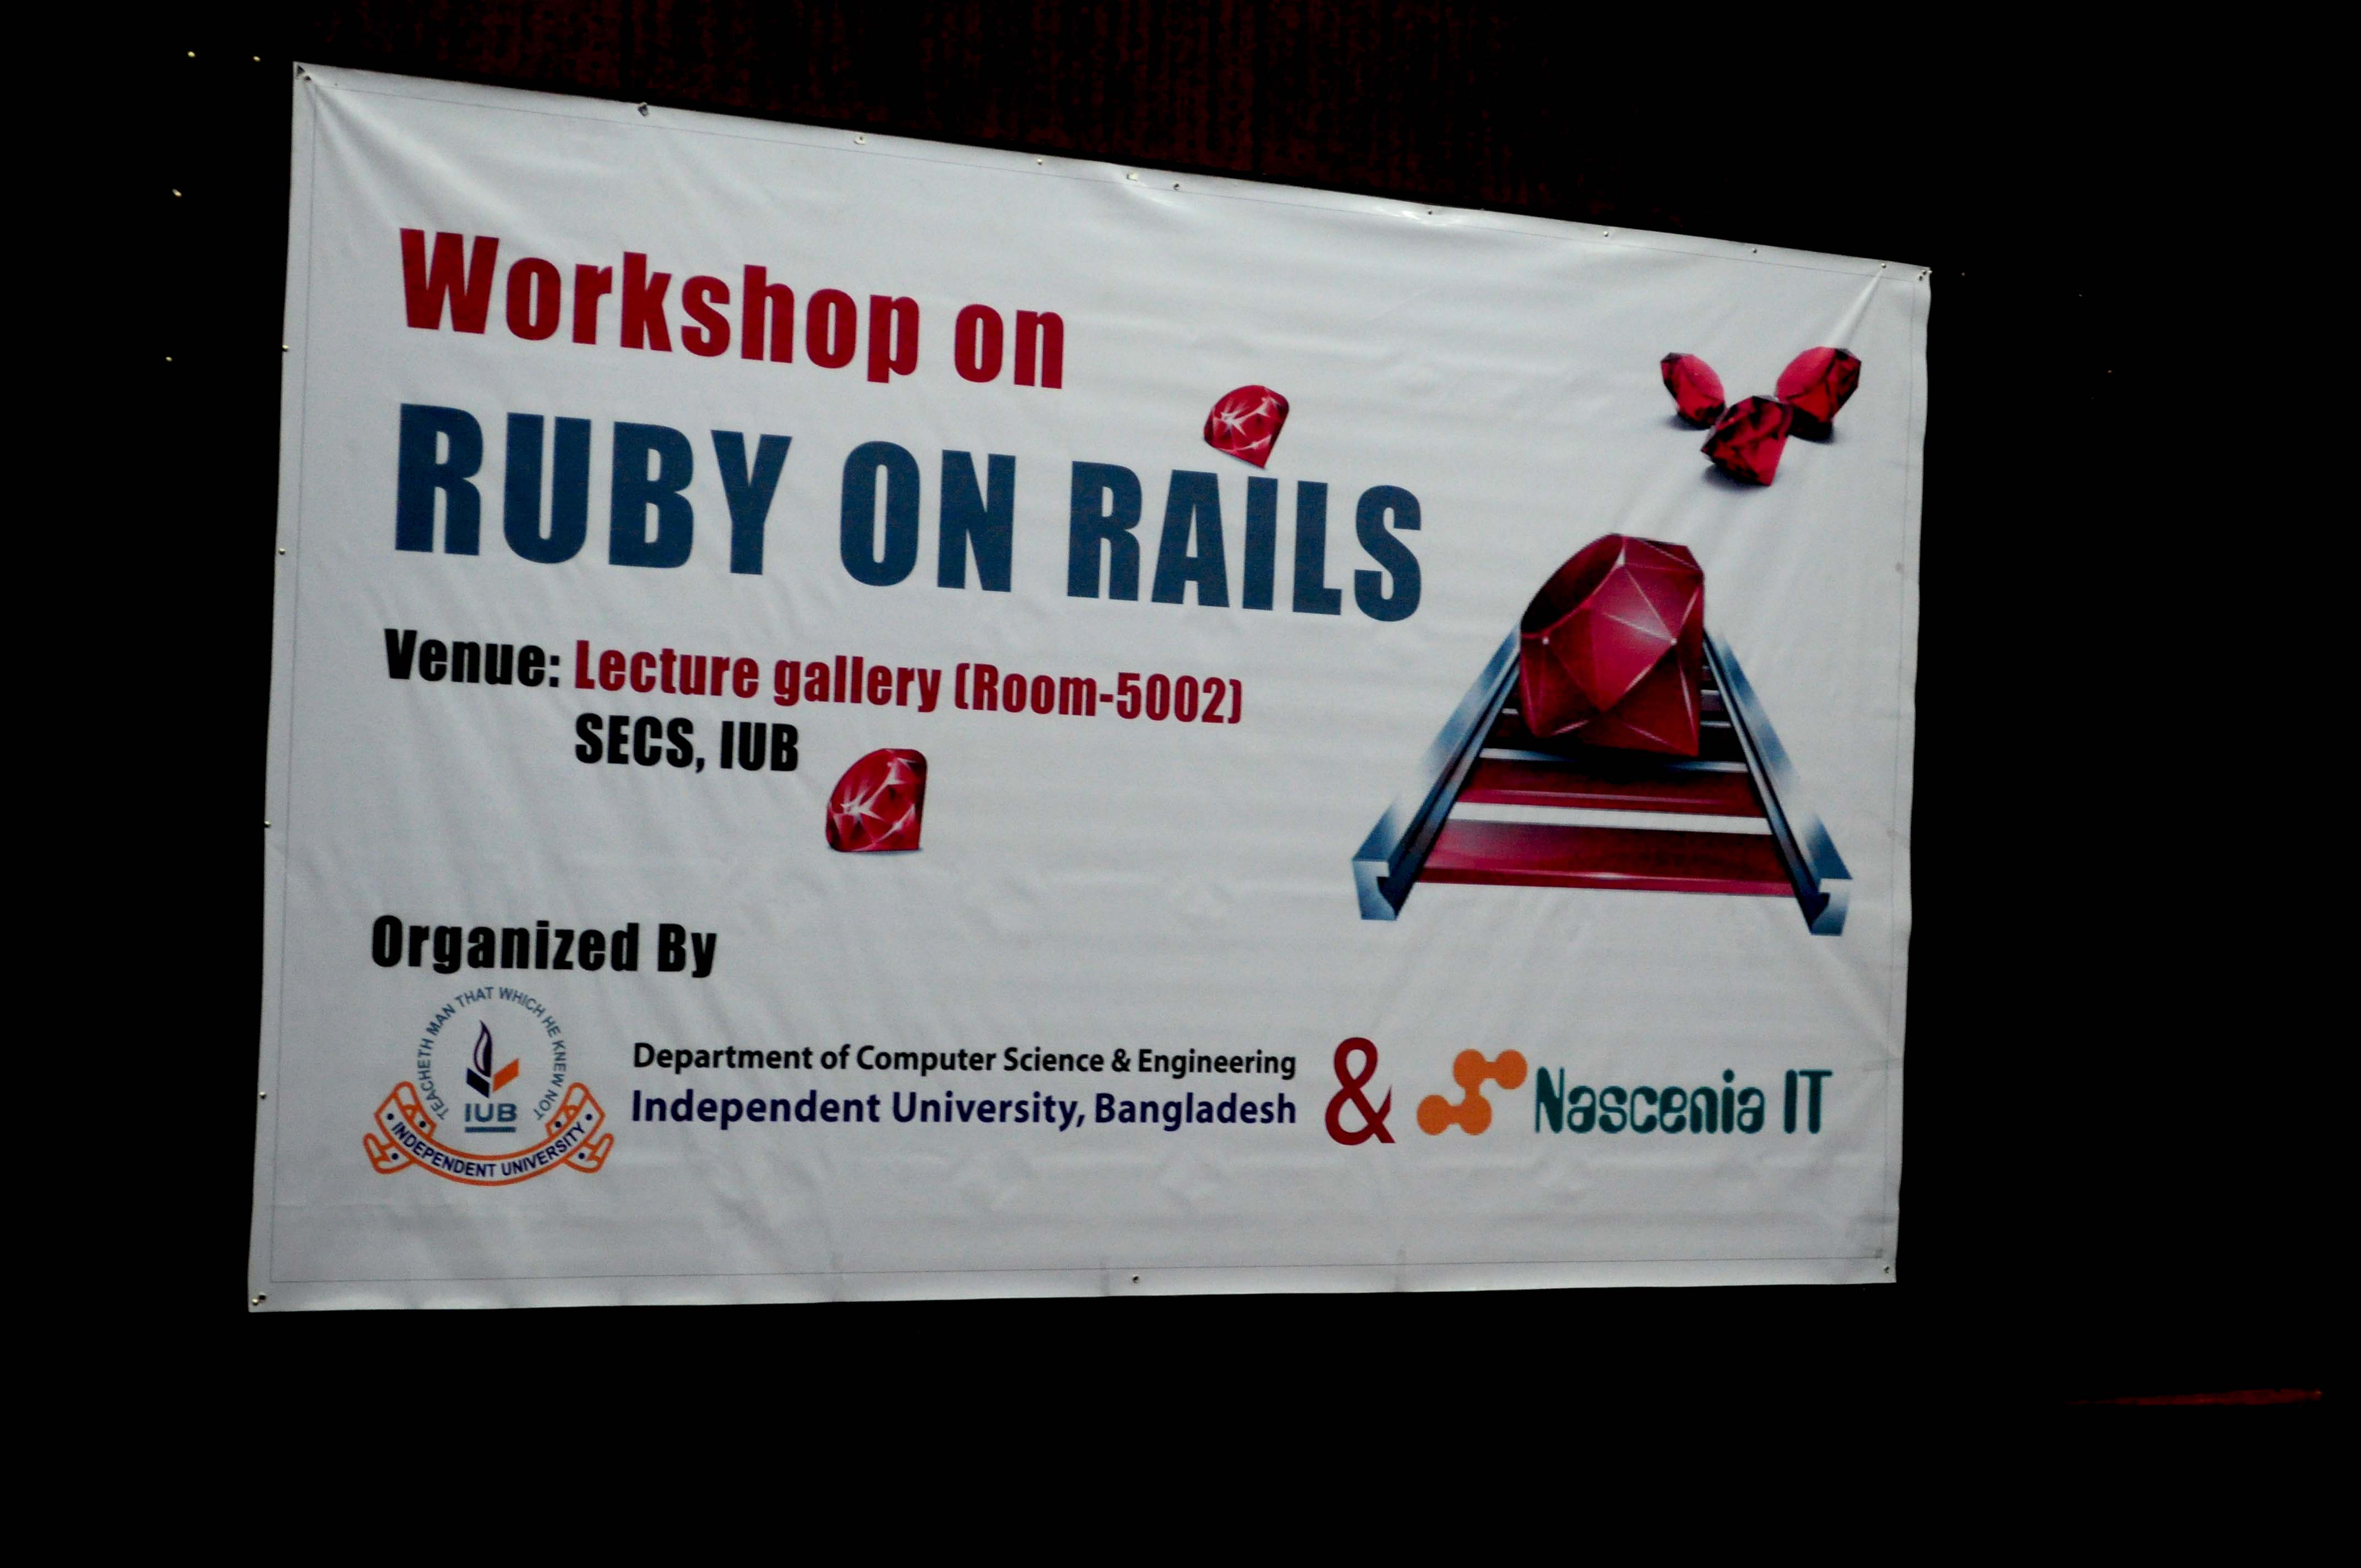 Ruby on Rails workshop held at IUB by Nascenia IT